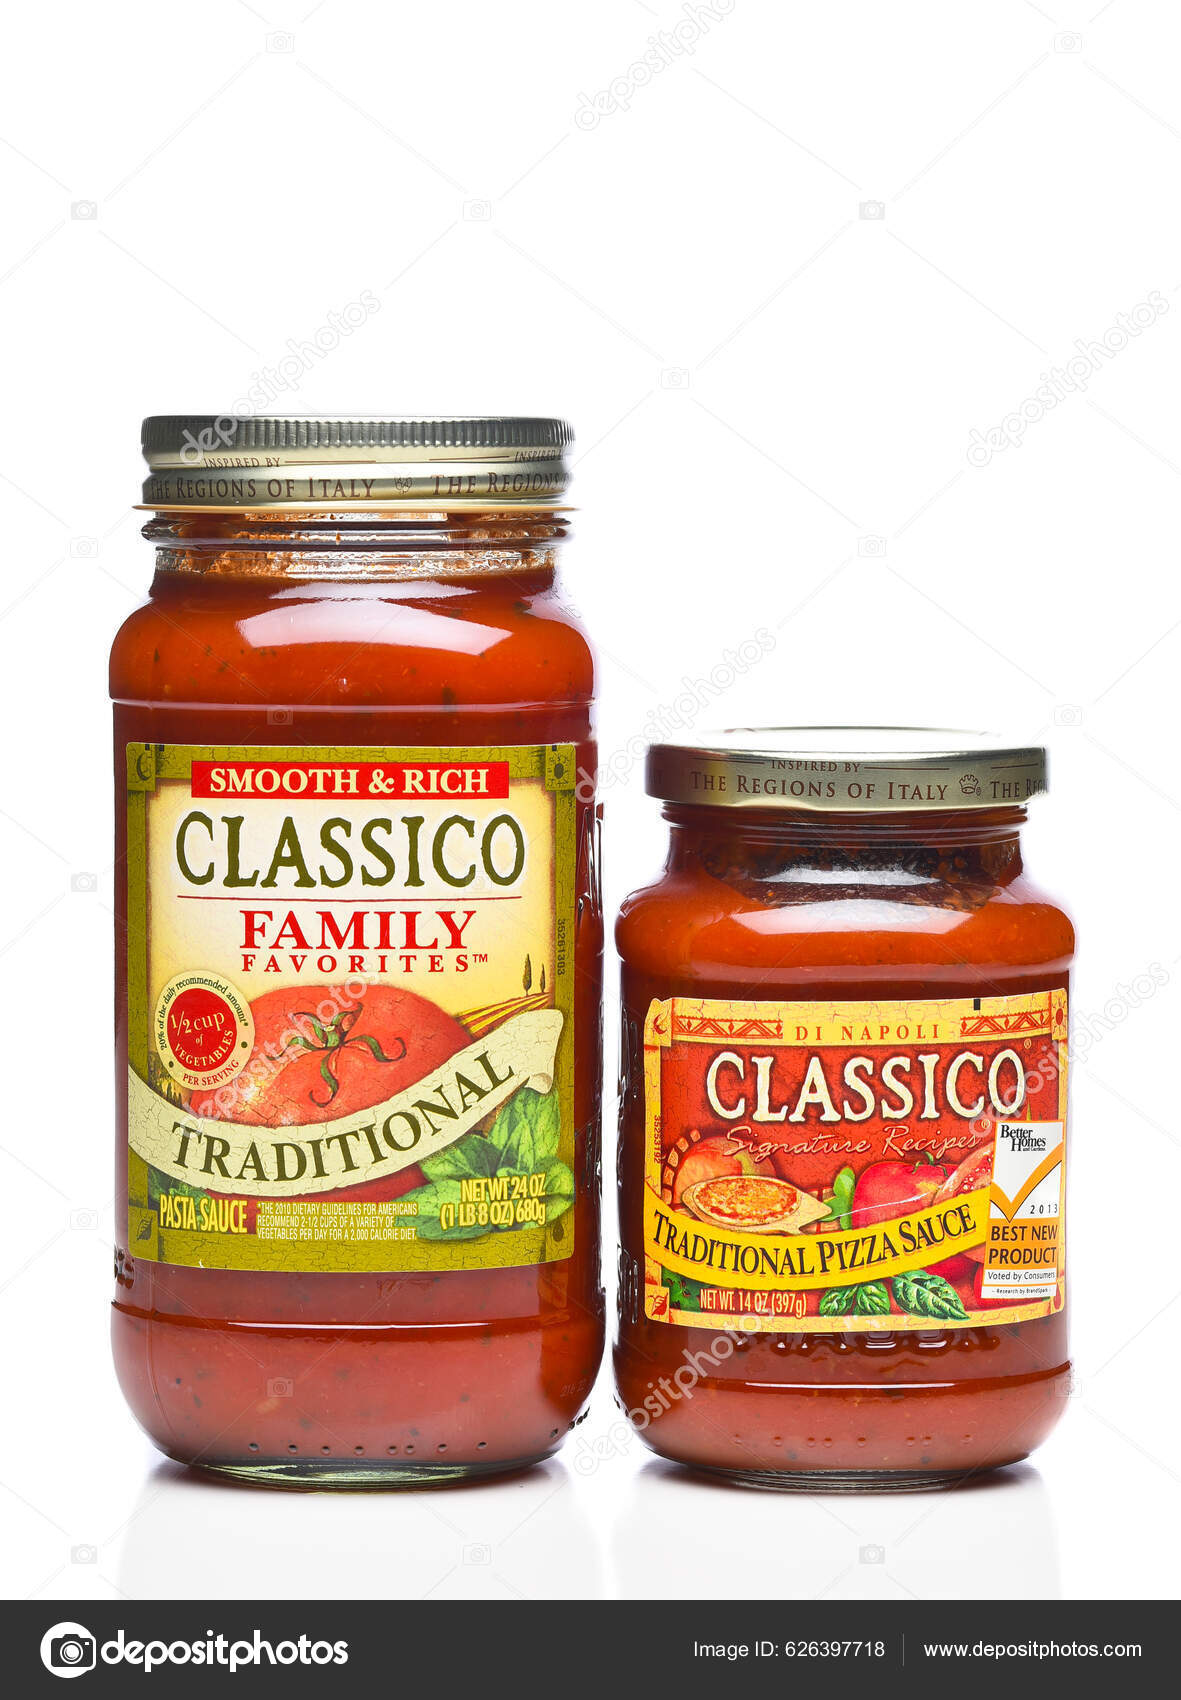 Classico Organic Pizza Sauce, 14 oz Jar 